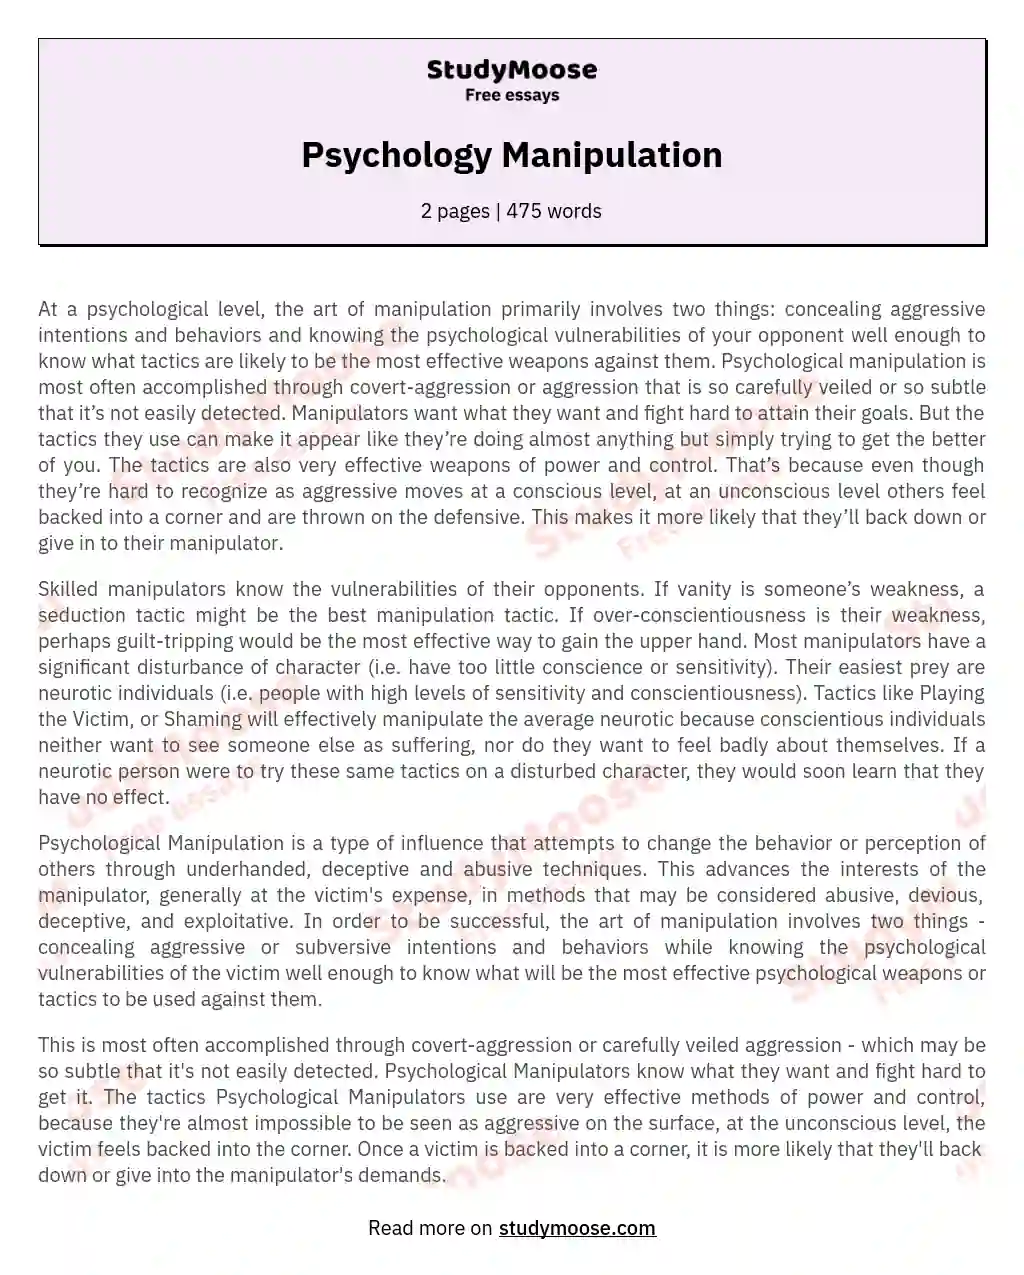 Psychology Manipulation essay